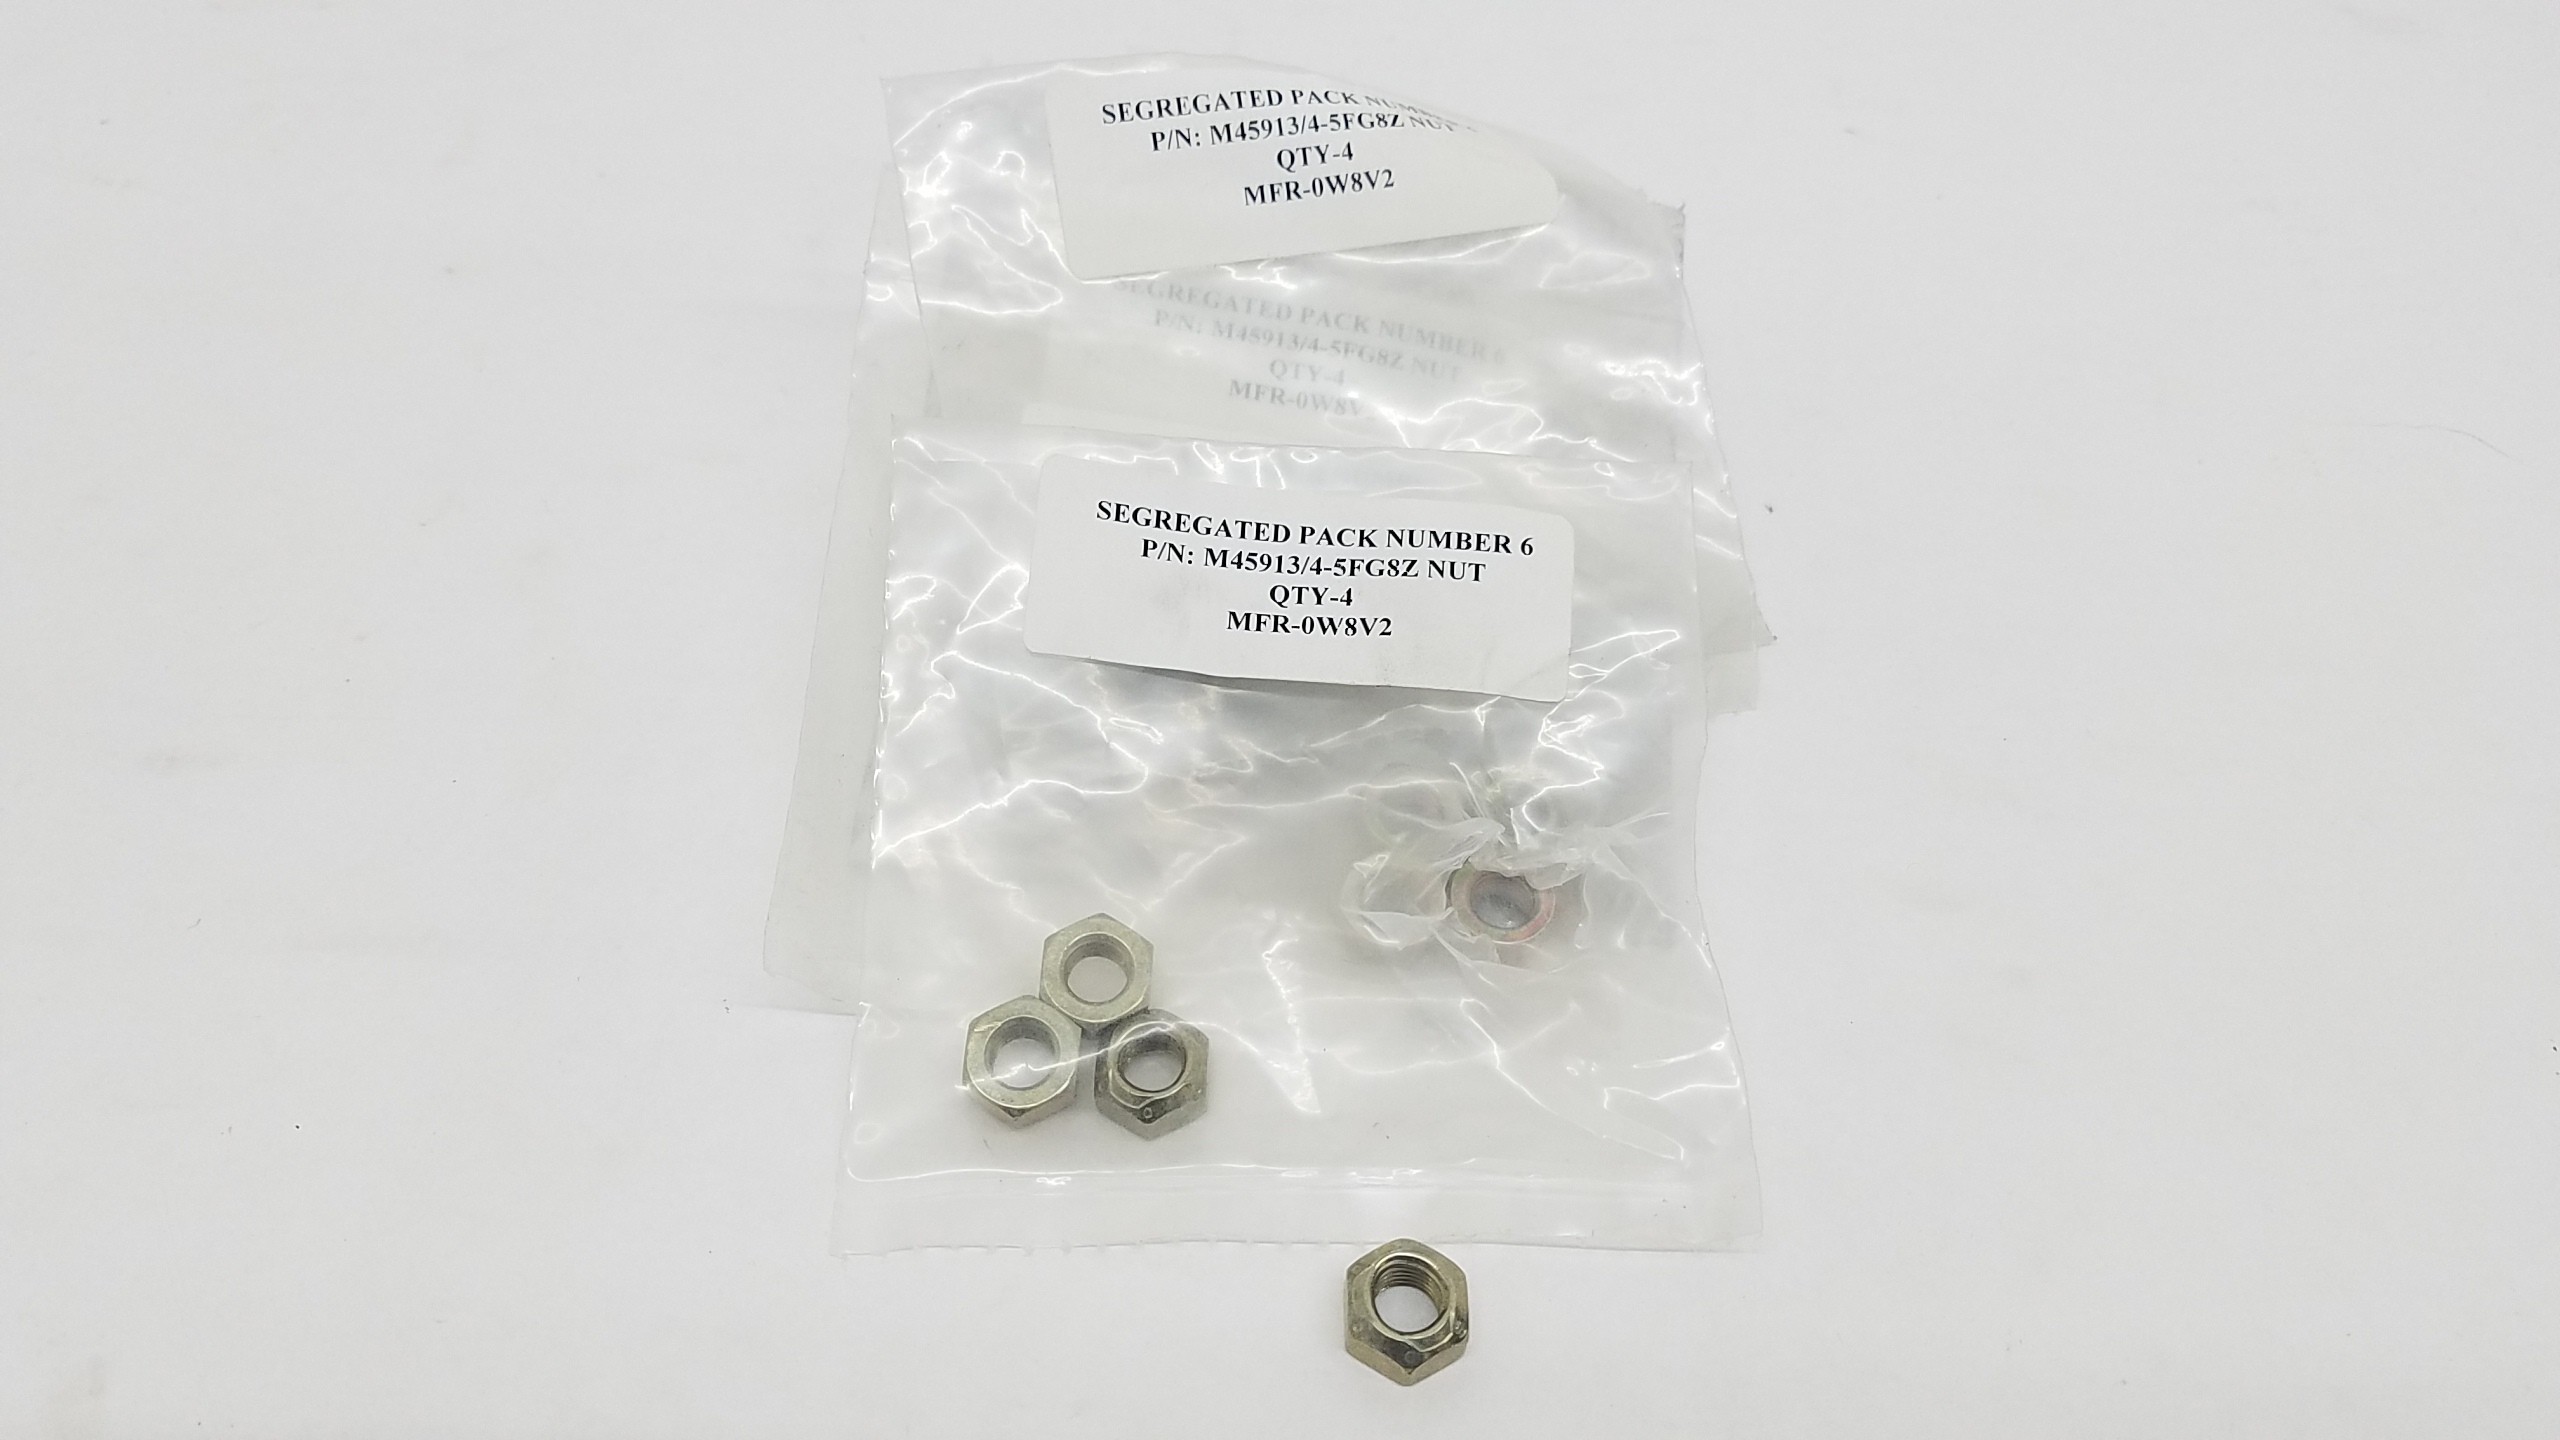 5/16" All Metal Lock Nut M45913/4-5FG8Z Lot of 20